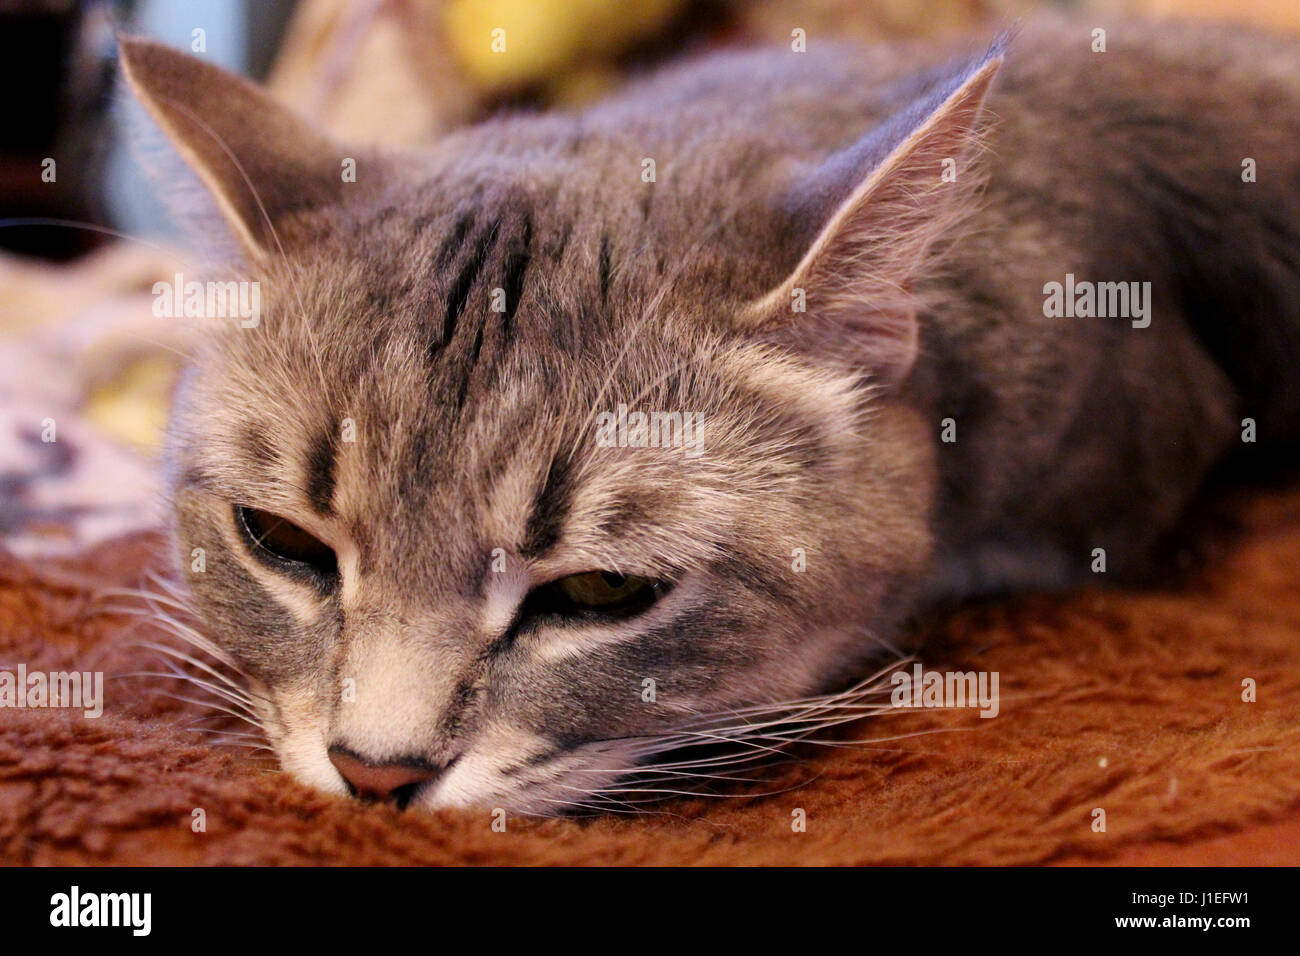 close-up of sleeping muzzle of Scottish Straight cat Stock Photo